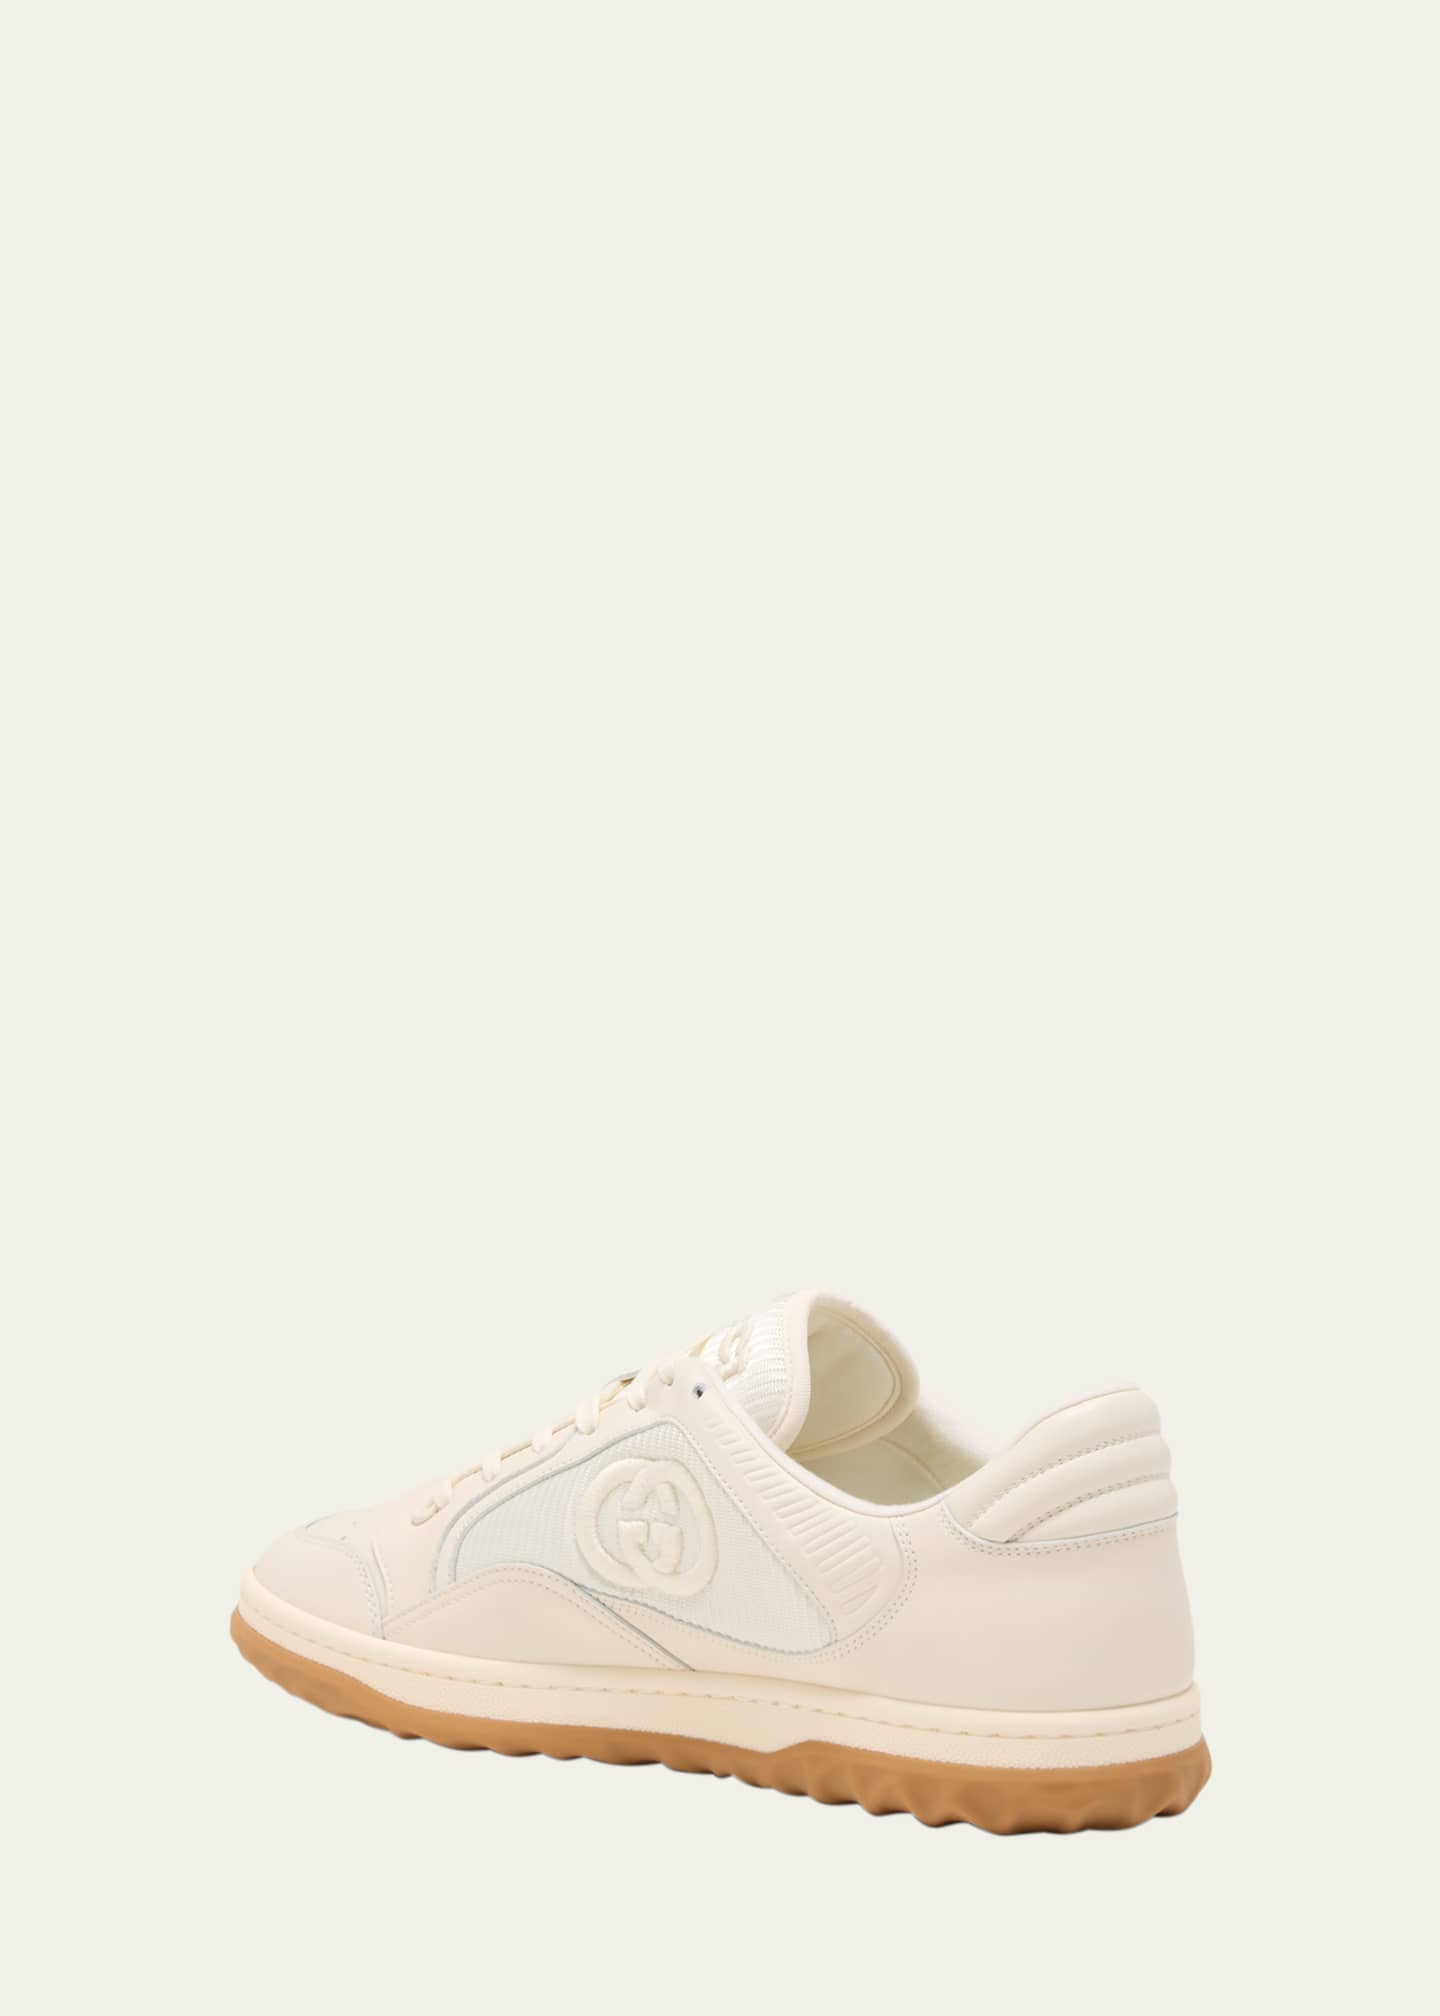 Gucci Men's Mac80 Sneaker